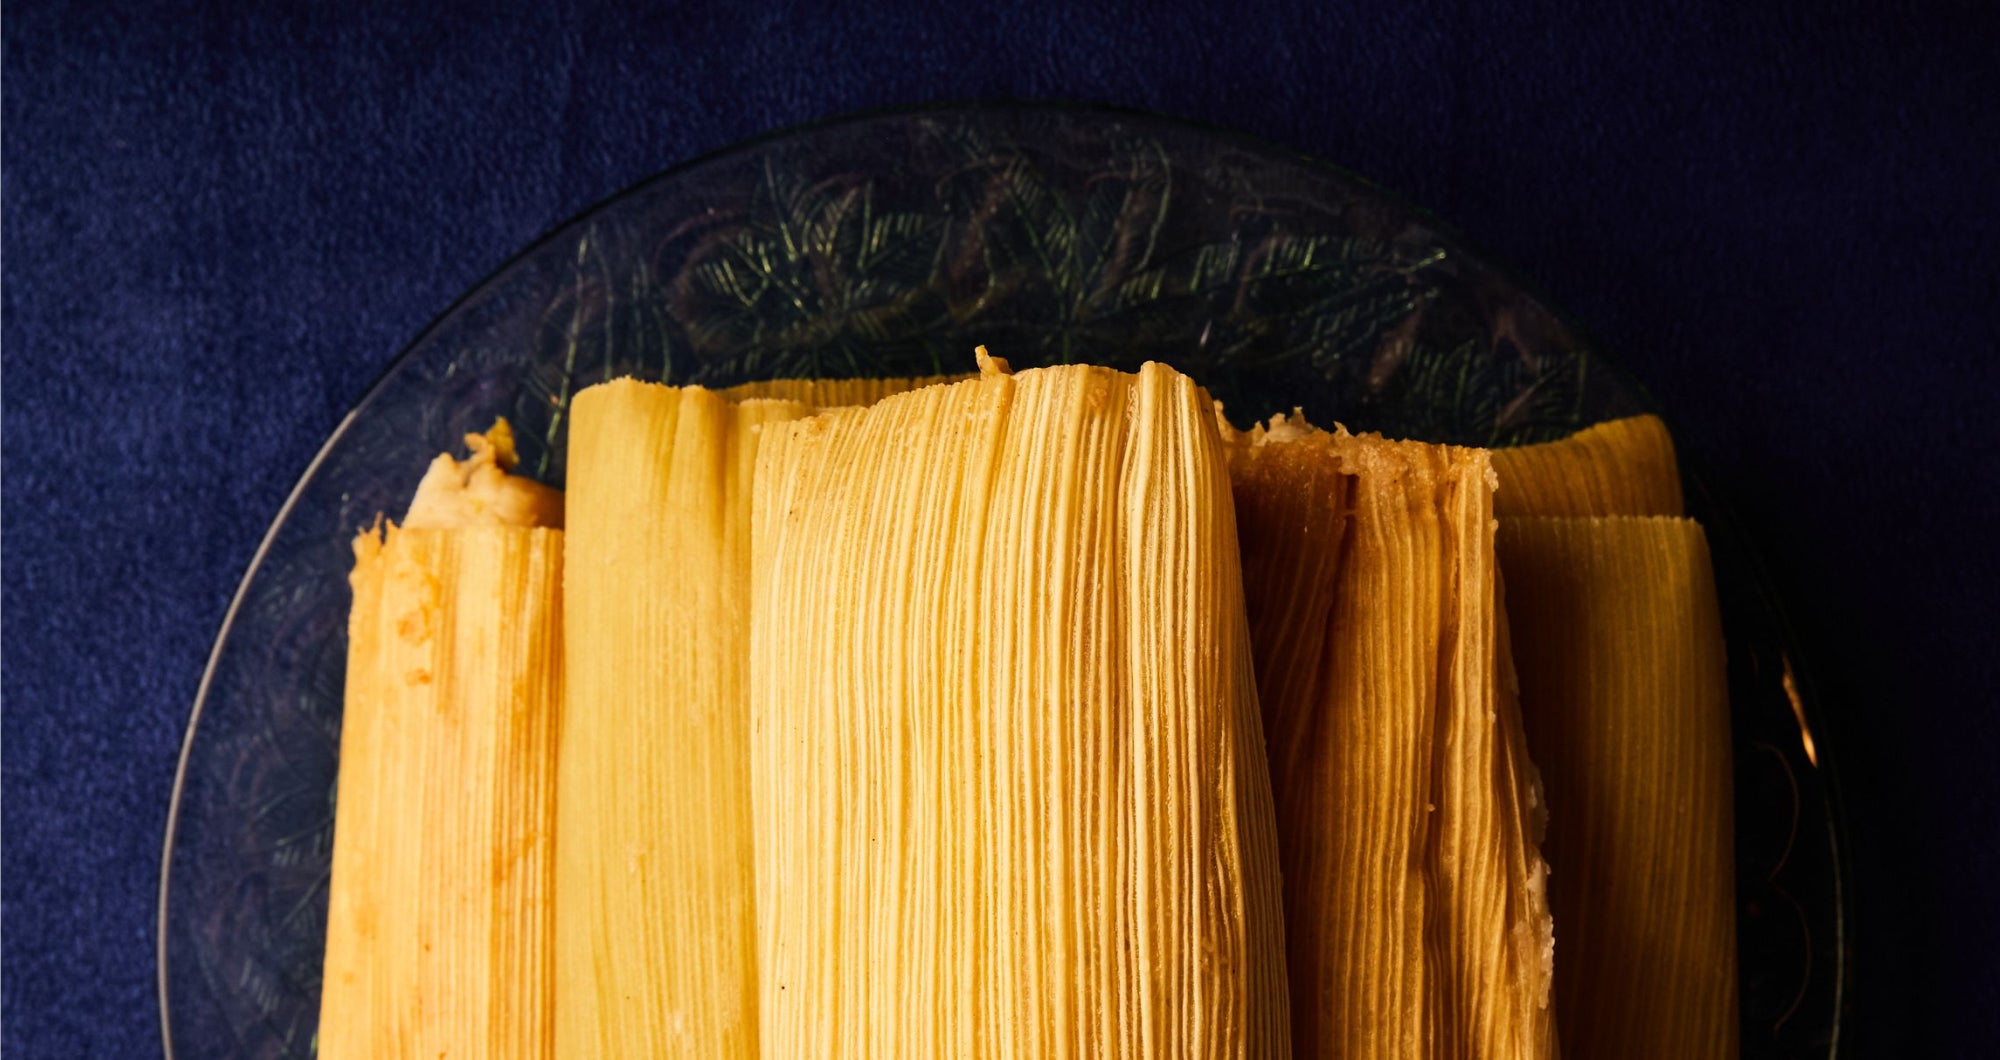 Hojas de Maíz  Masienda Non-GMO Corn Husks for Making Tamales